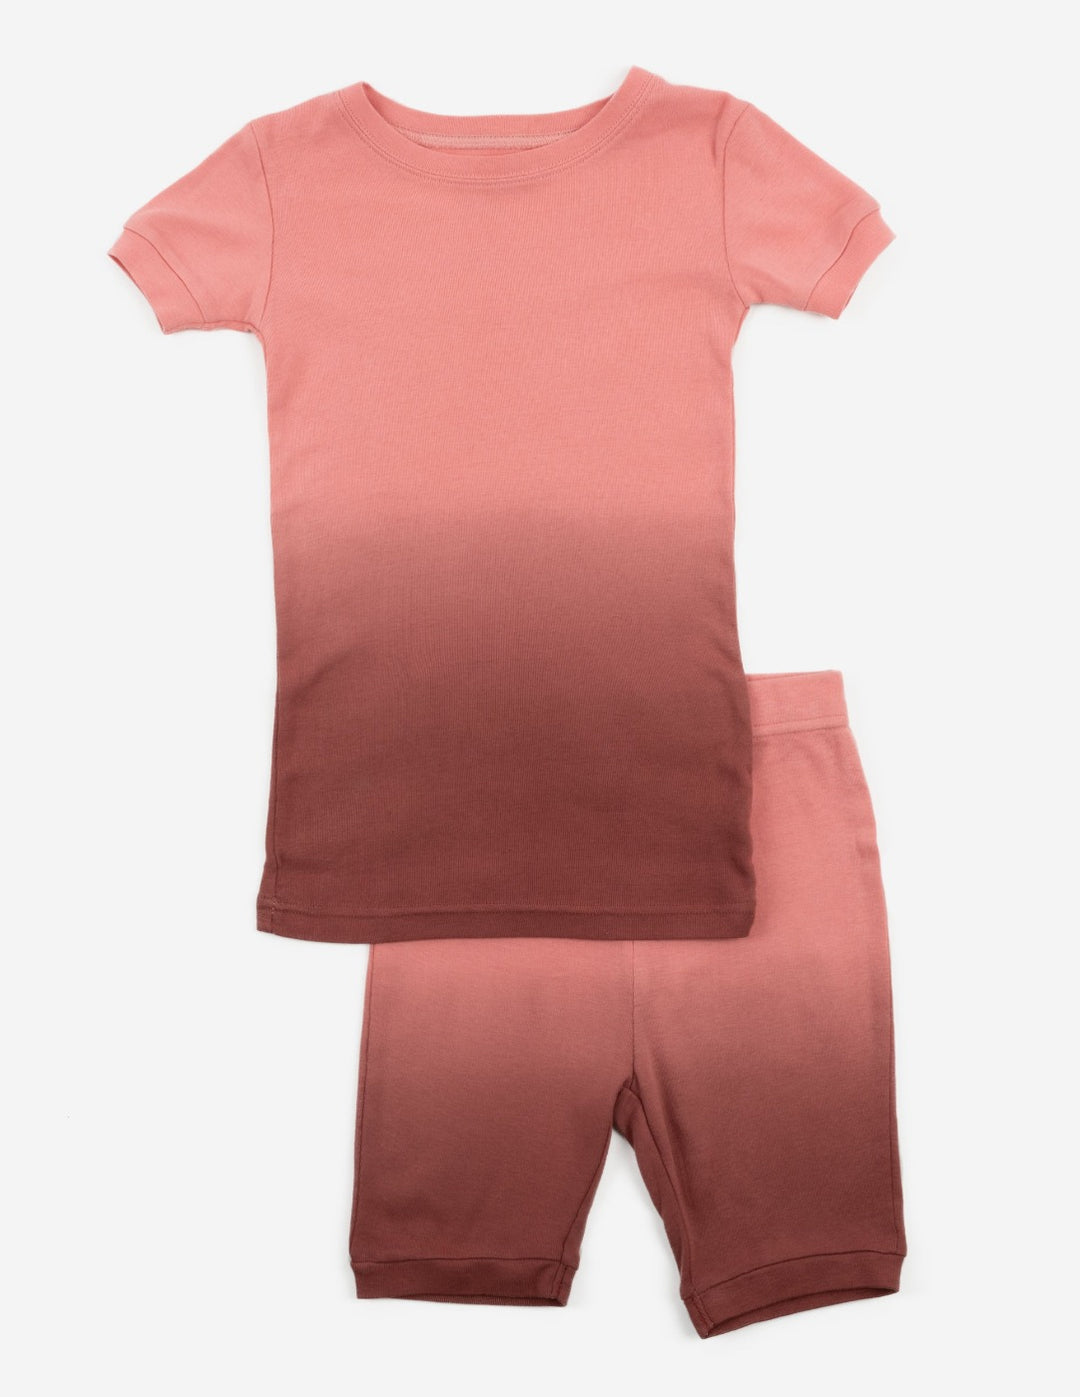 Kids Cotton Short Pink Ombré Tie Dye Pajamas